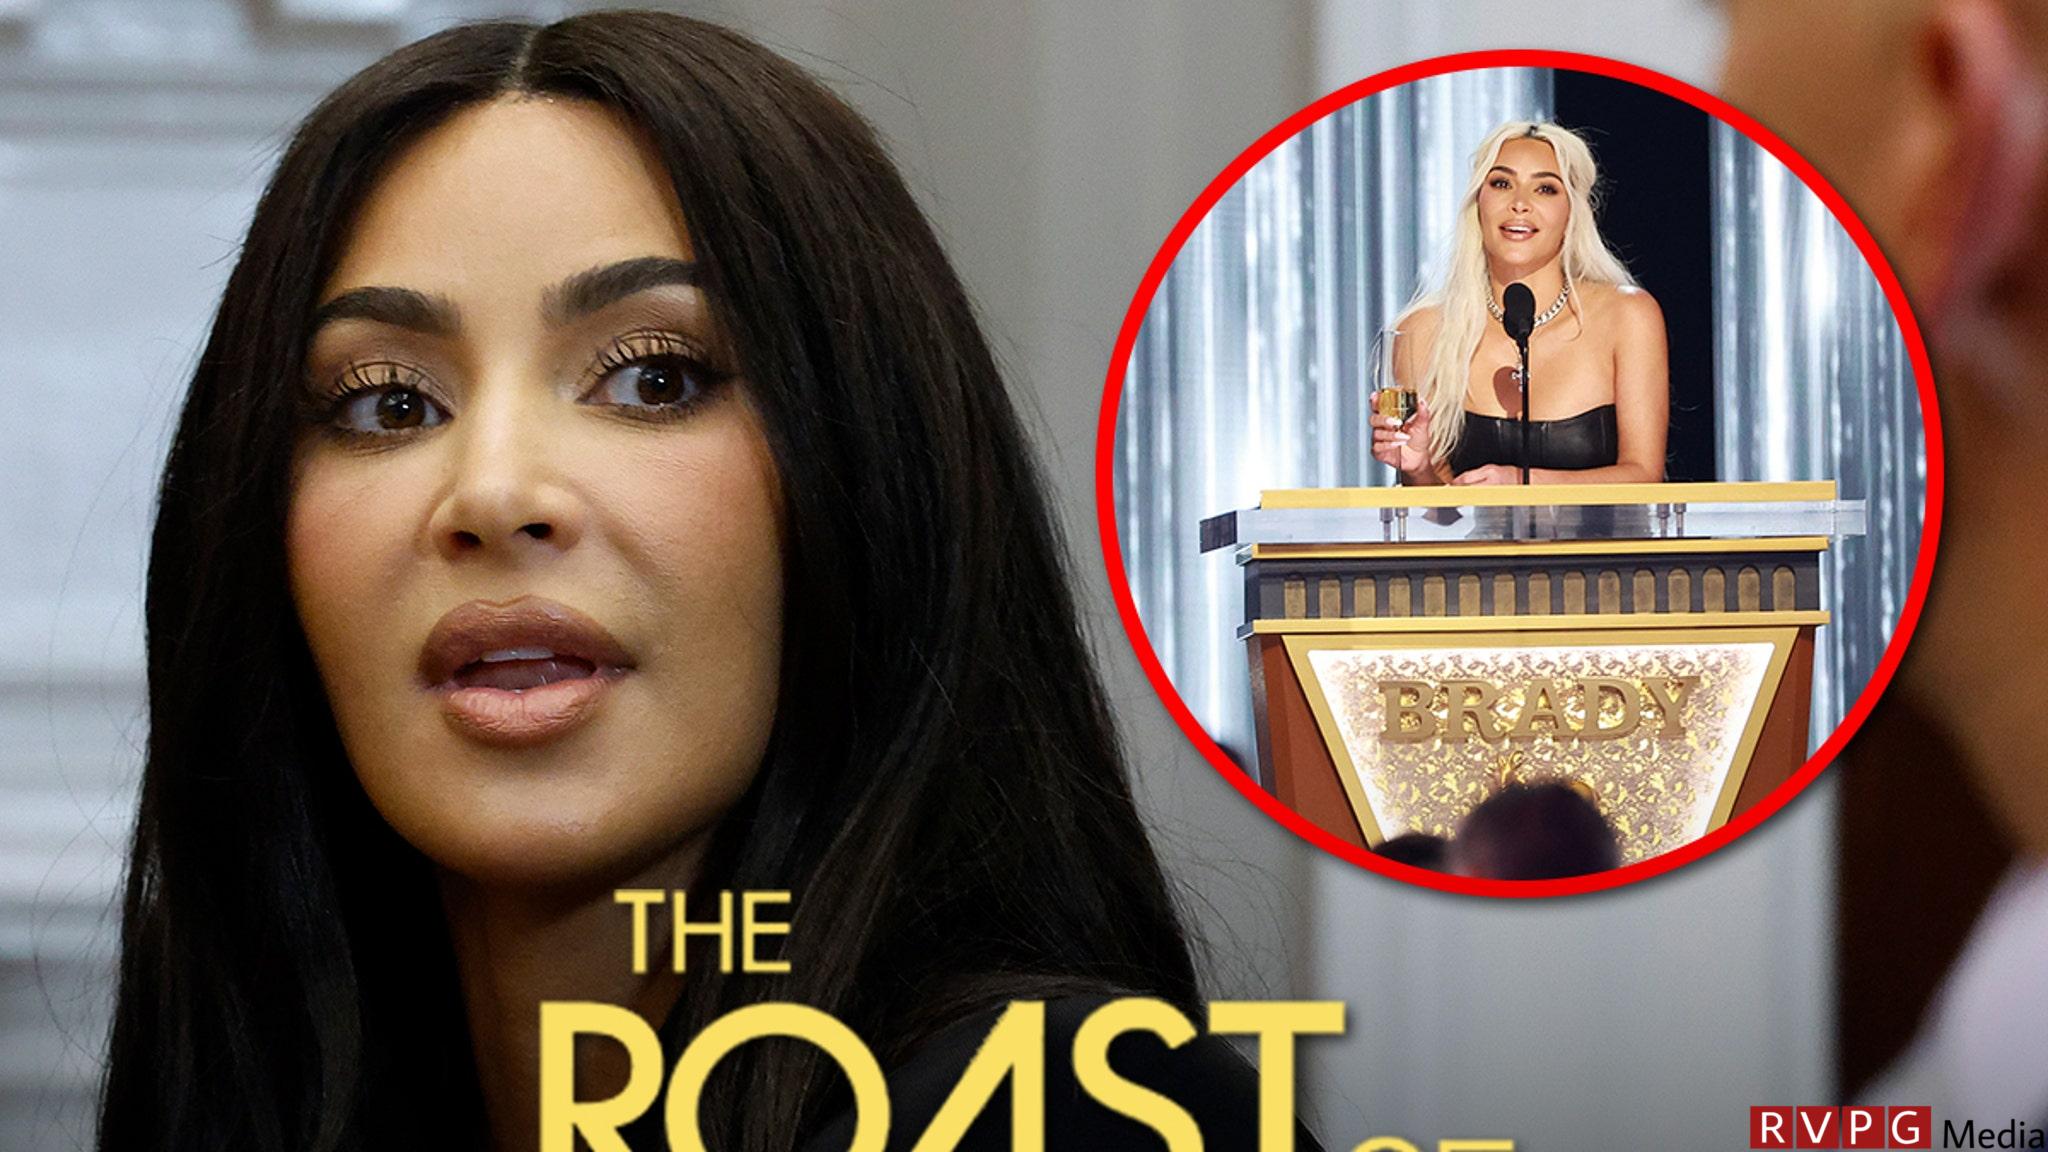 Kim Kardashian was mercilessly booed and skewered at Tom Brady's Roast